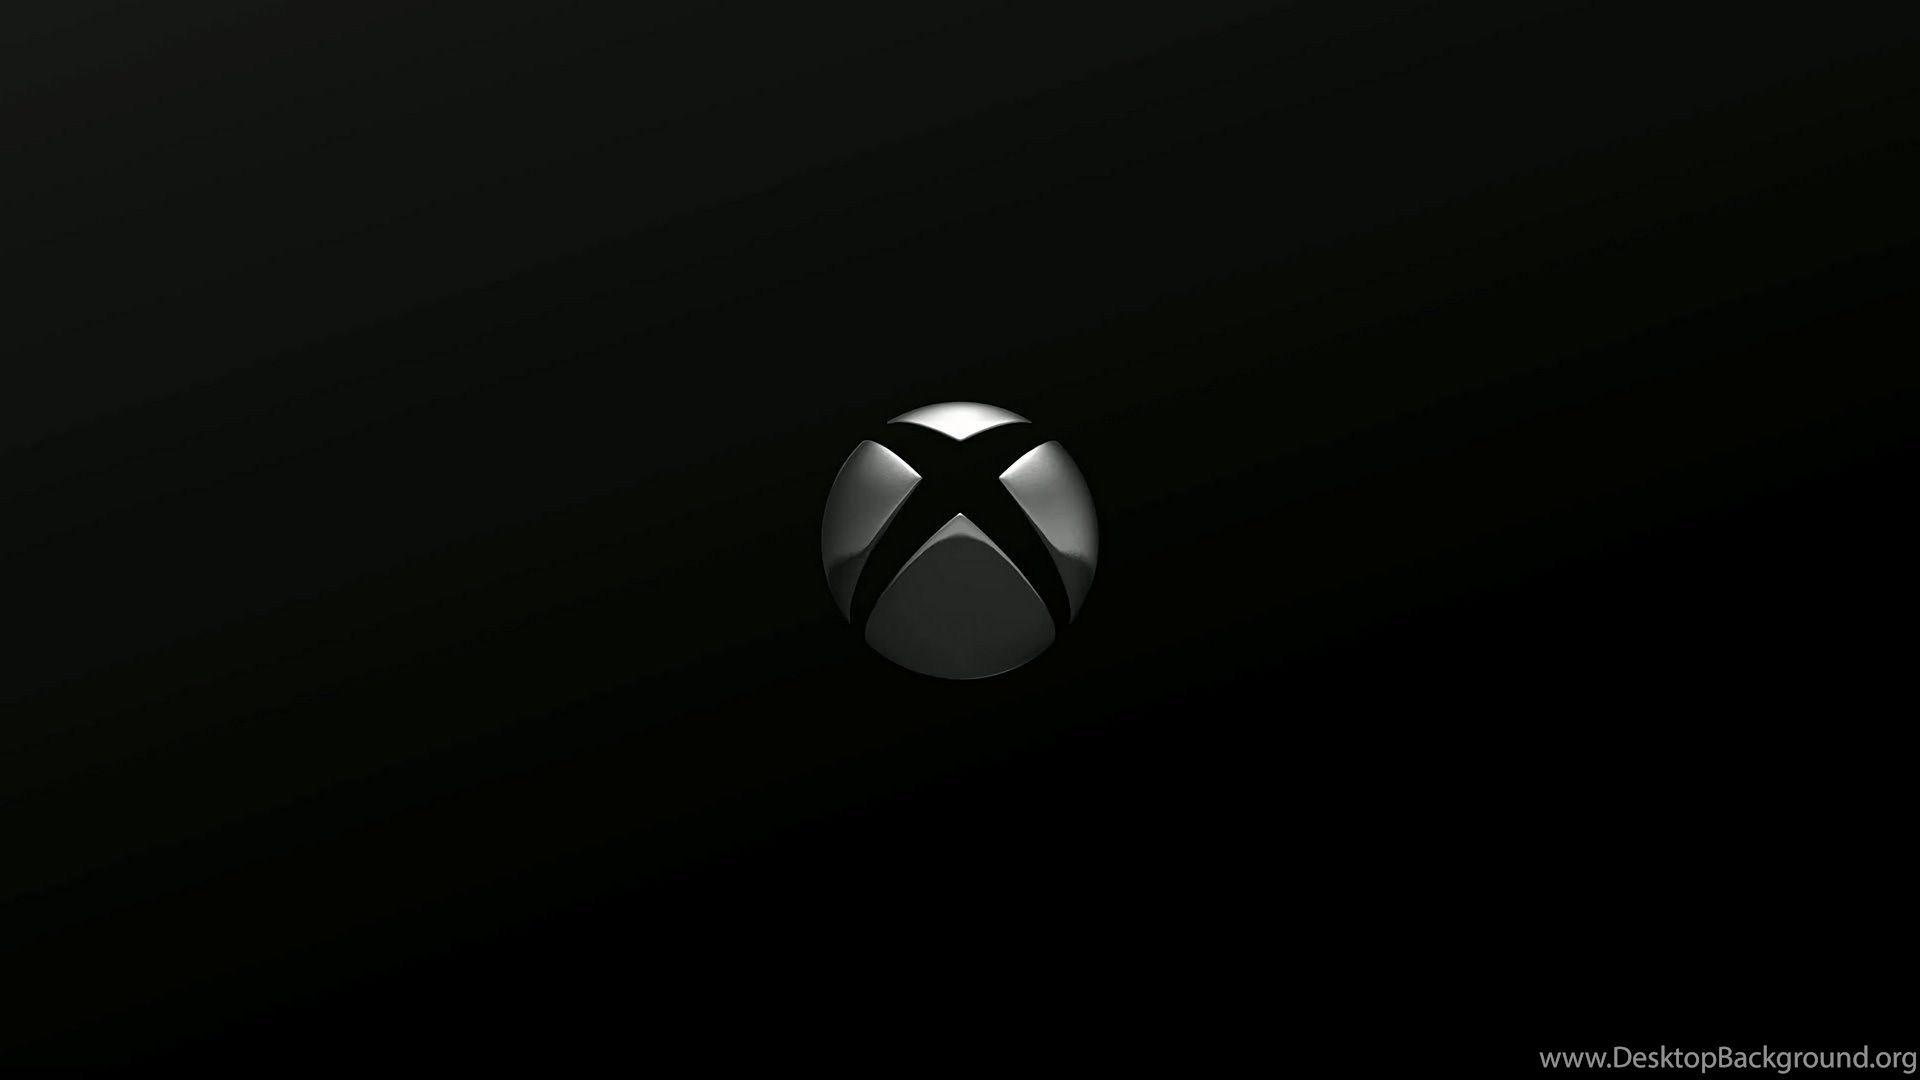 Xbox One Logo Wallpaper Black Background 1920. 4545 Desktop Background